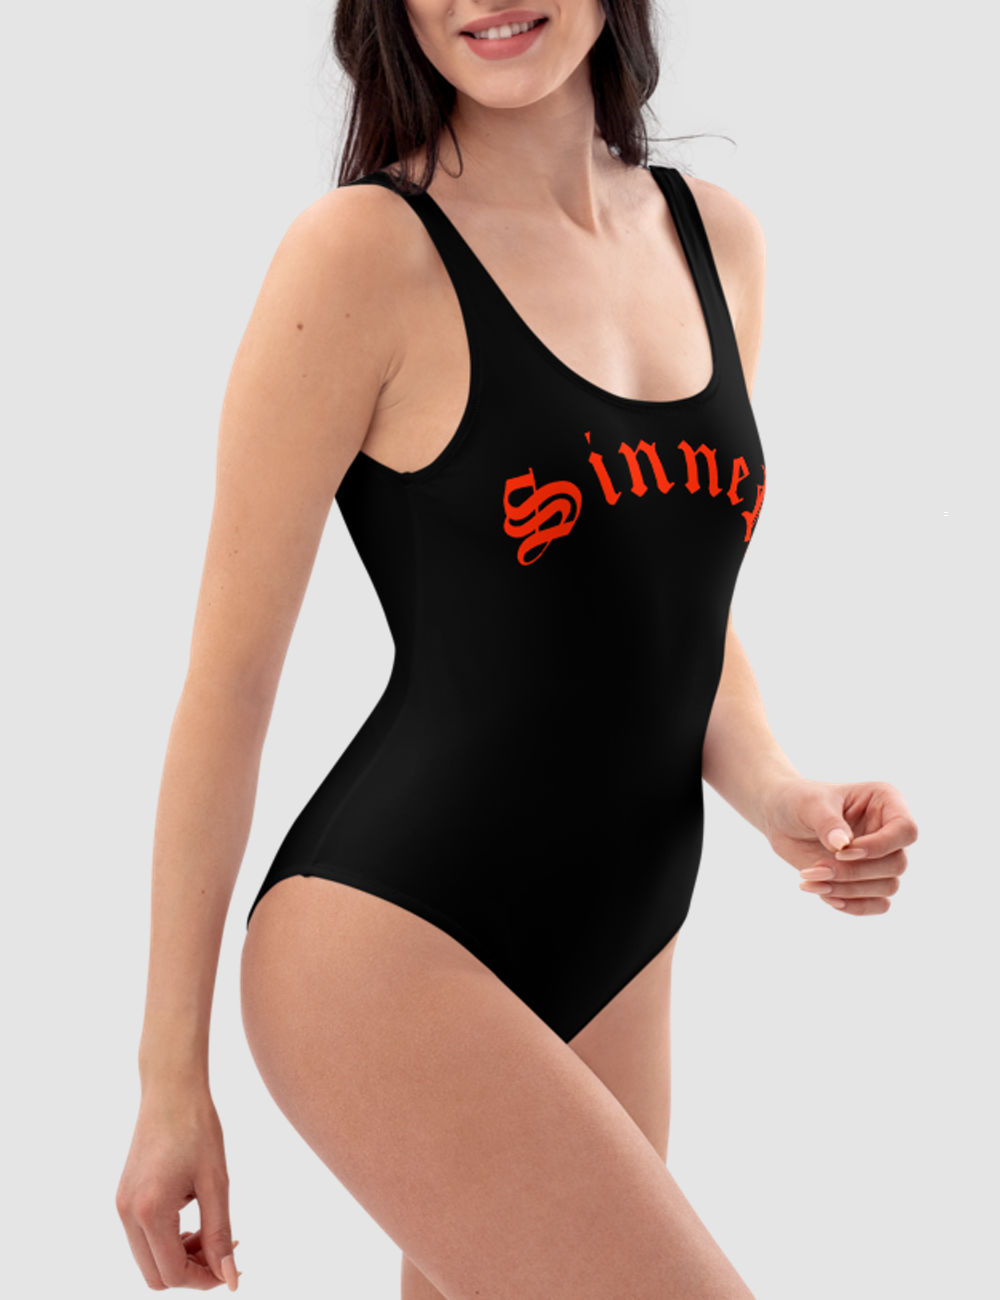 Sinner | Women's One-Piece Swimsuit OniTakai